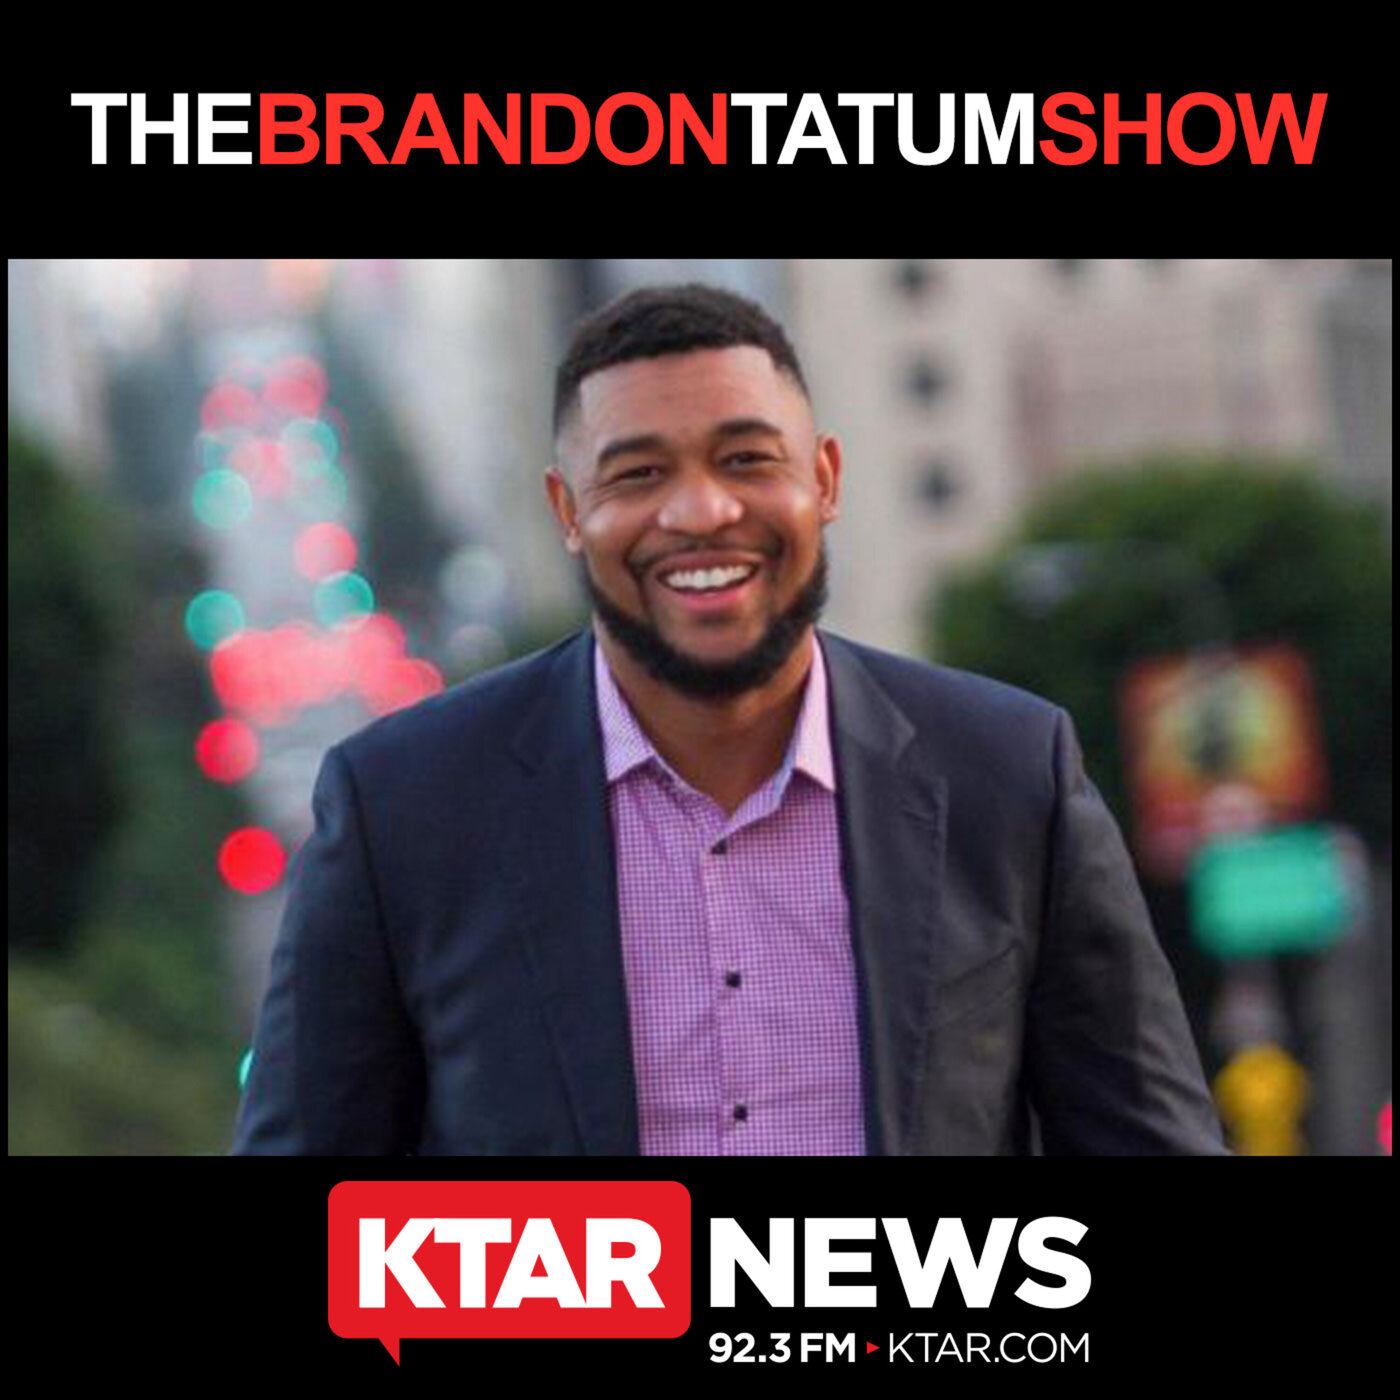 May 2, 2020 - The Brandon Tatum Show